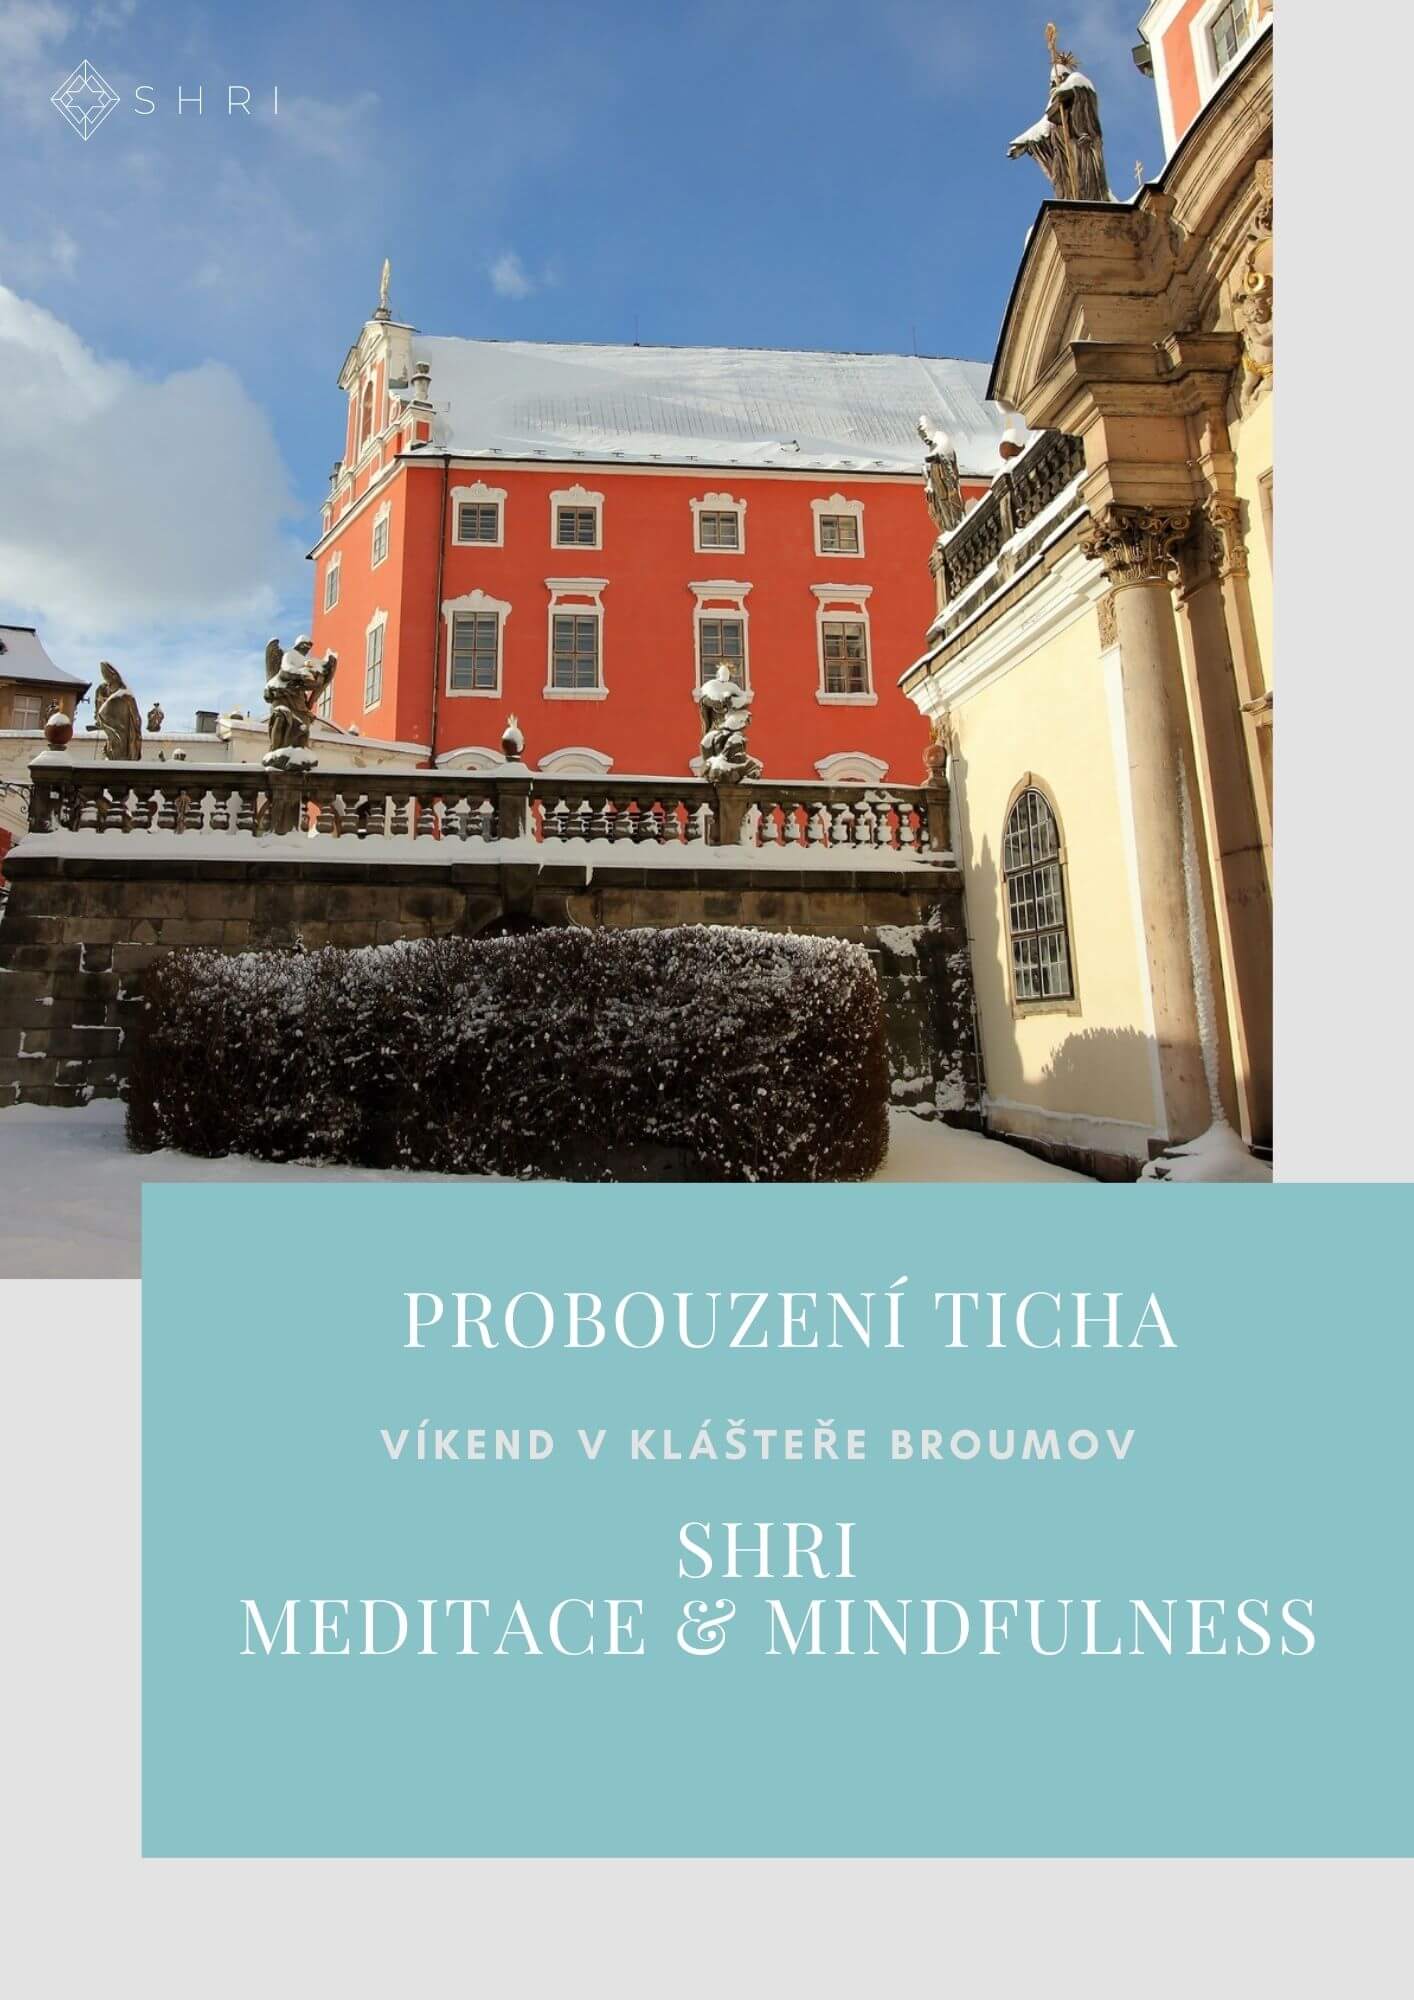 SHRI Meditace & Mindfulness - Klášter Broumov - Víkendový kurz meditace